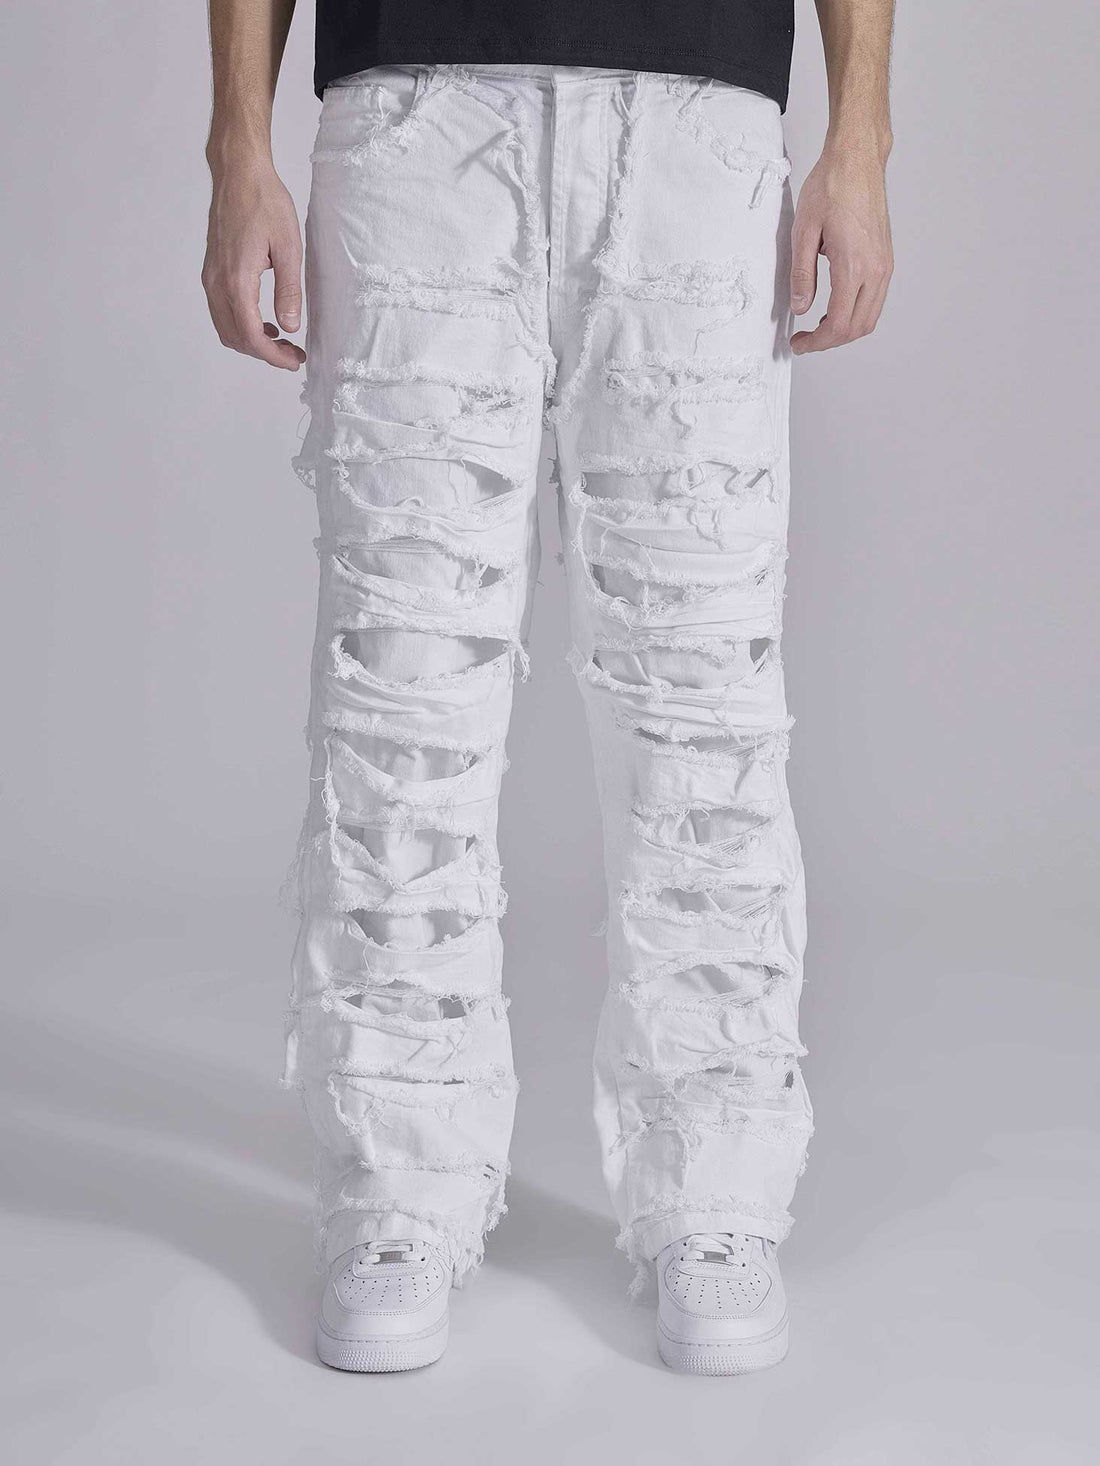 Double pants white 3.0